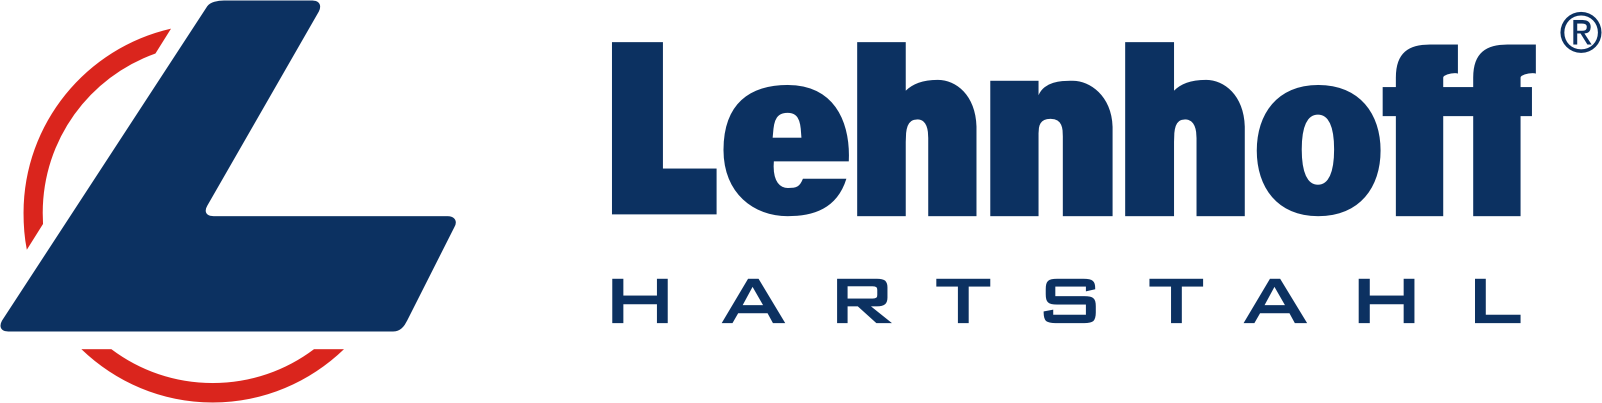 Lehnhoff Metalbau